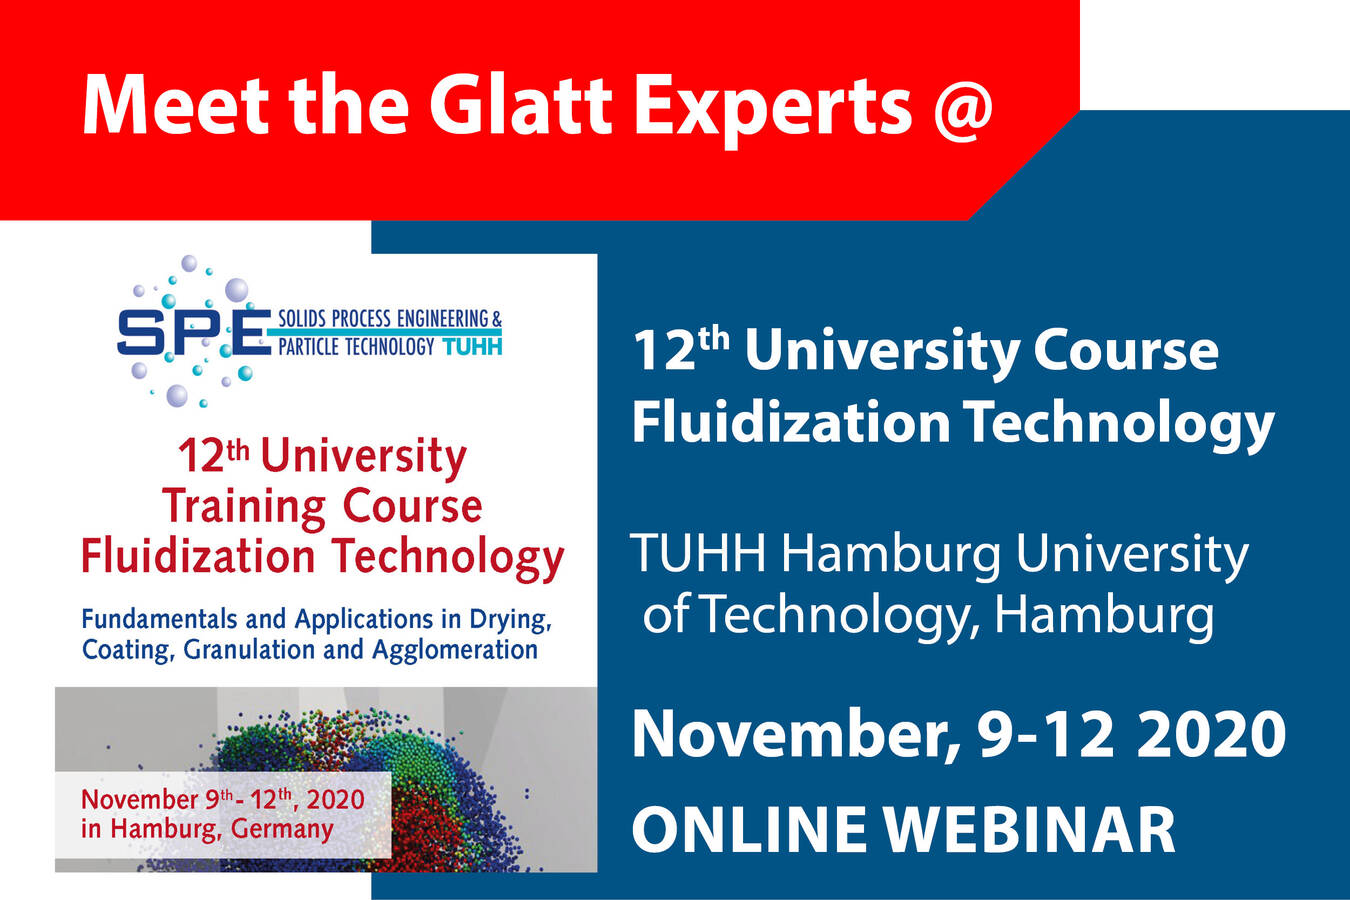 Meet the Glatt Experts @ the Online Webinar of TUHH